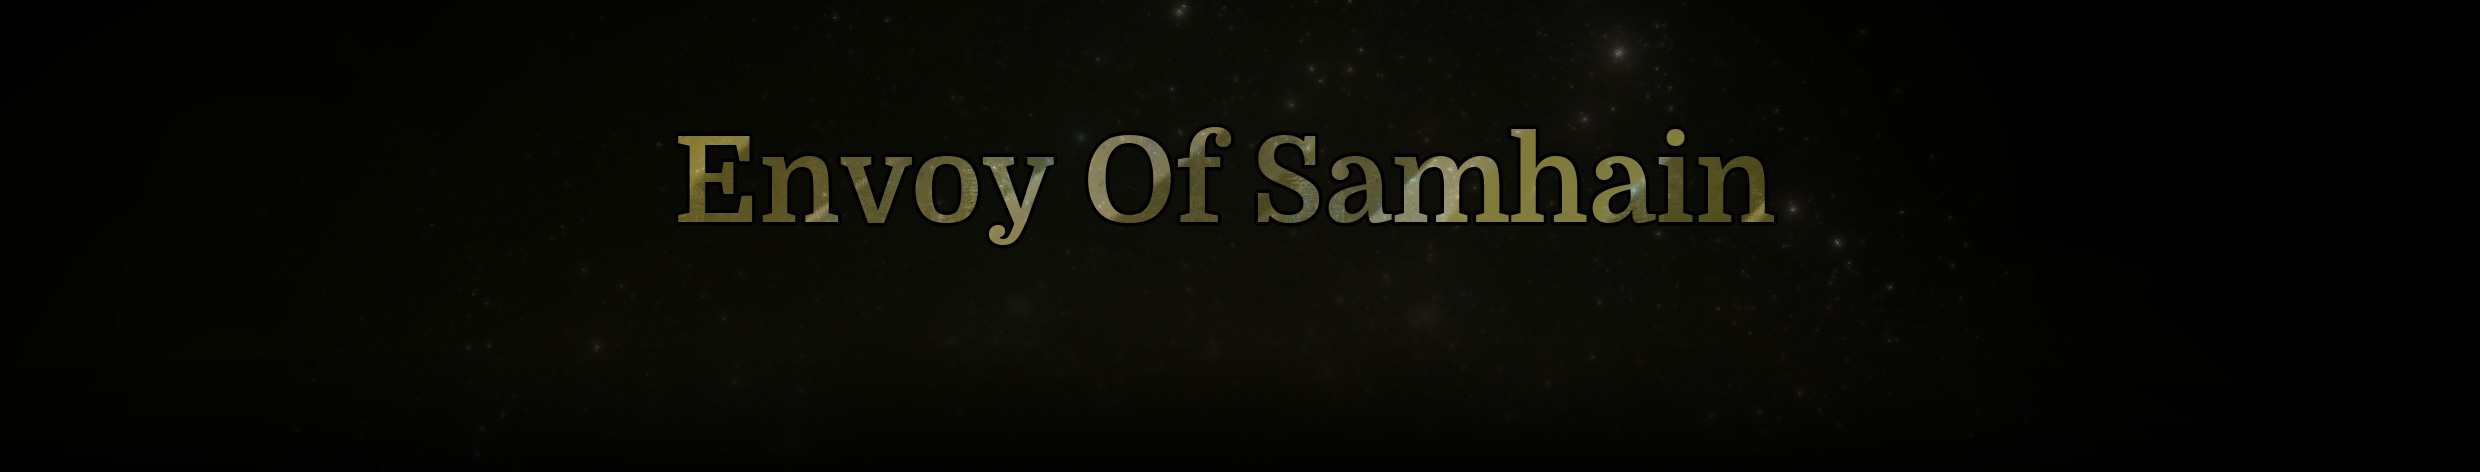 Envoy Of Samhain